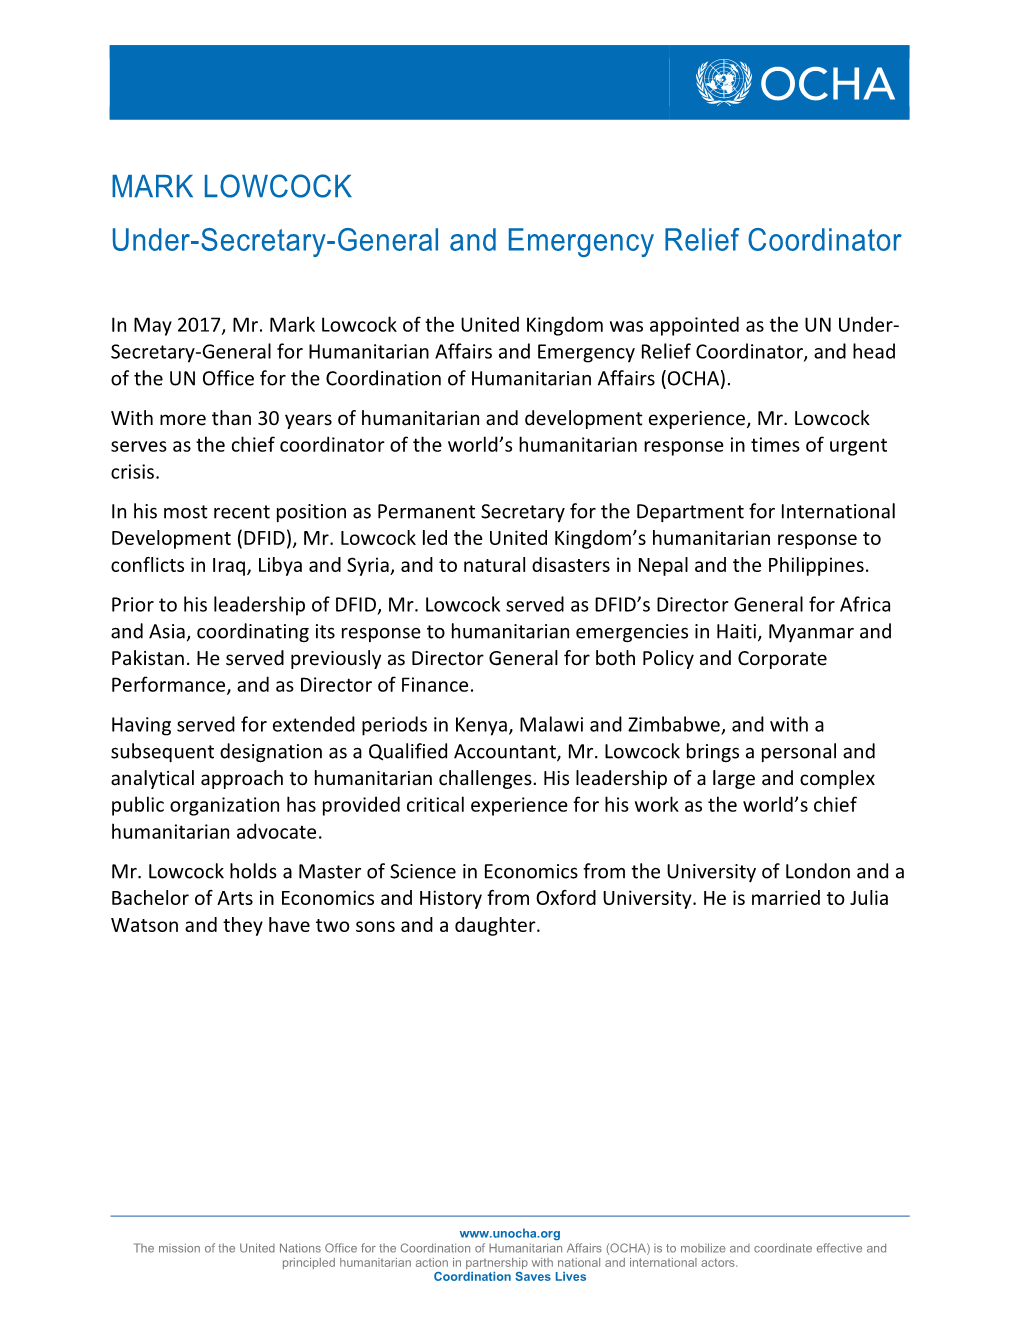 MARK LOWCOCK Under-Secretary-General and Emergency Relief Coordinator